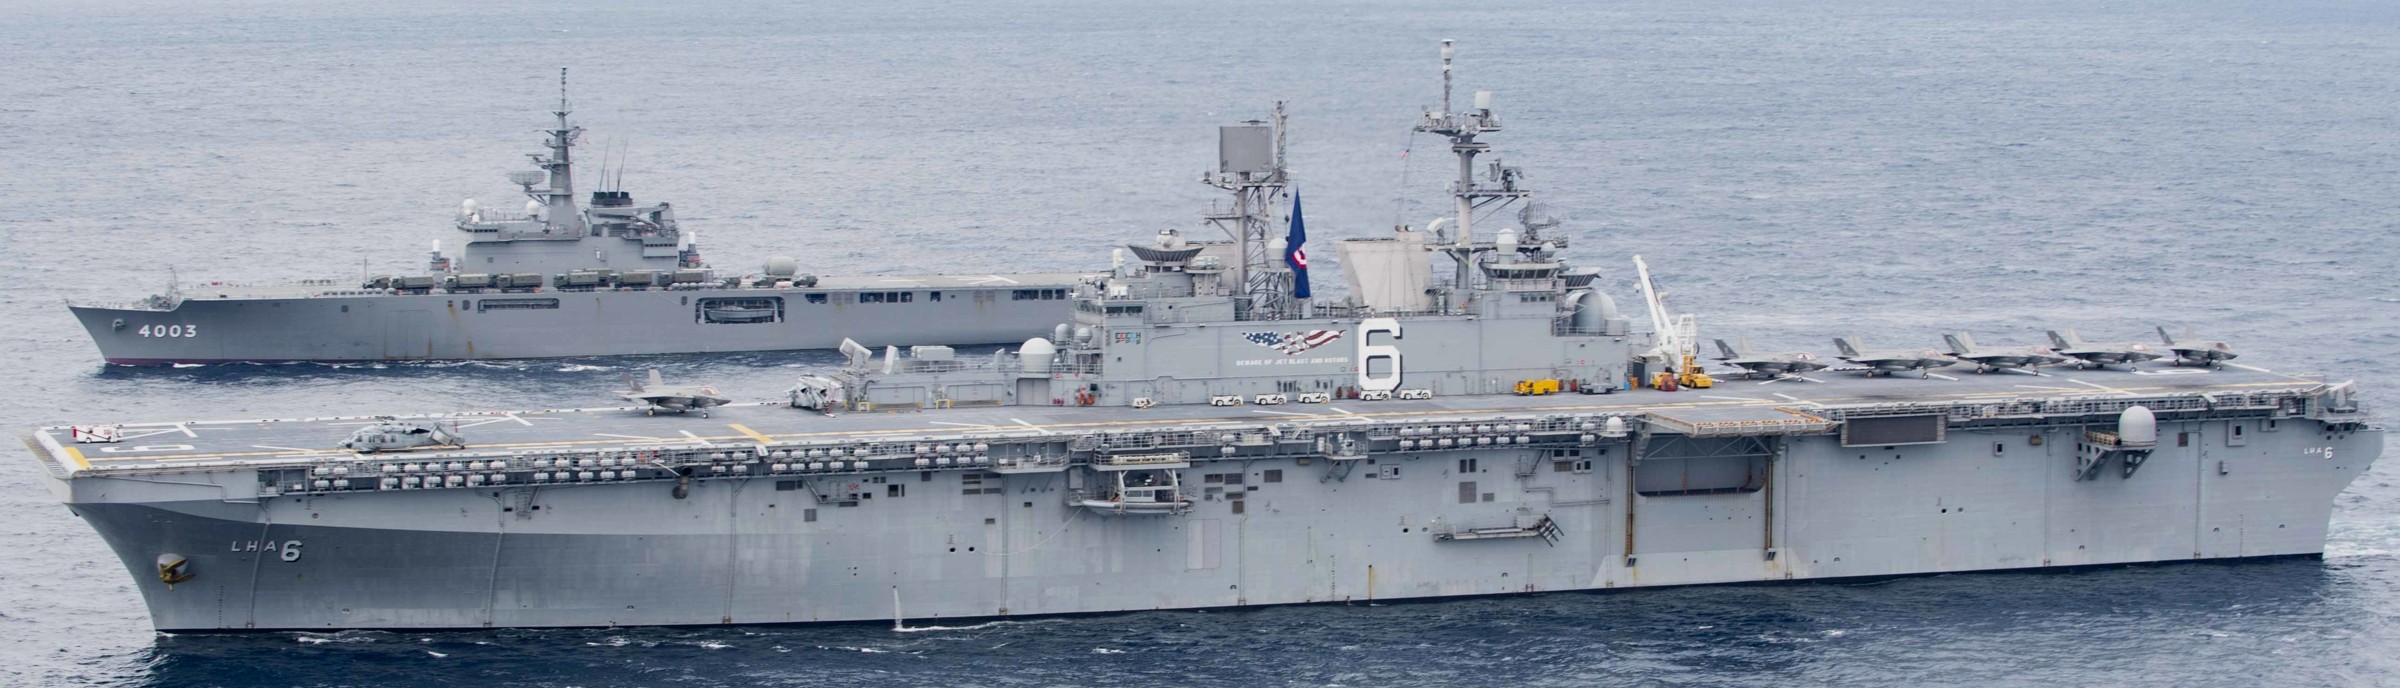 lha-6 uss america amphibious assault ship landing us navy marines vmm-265 152